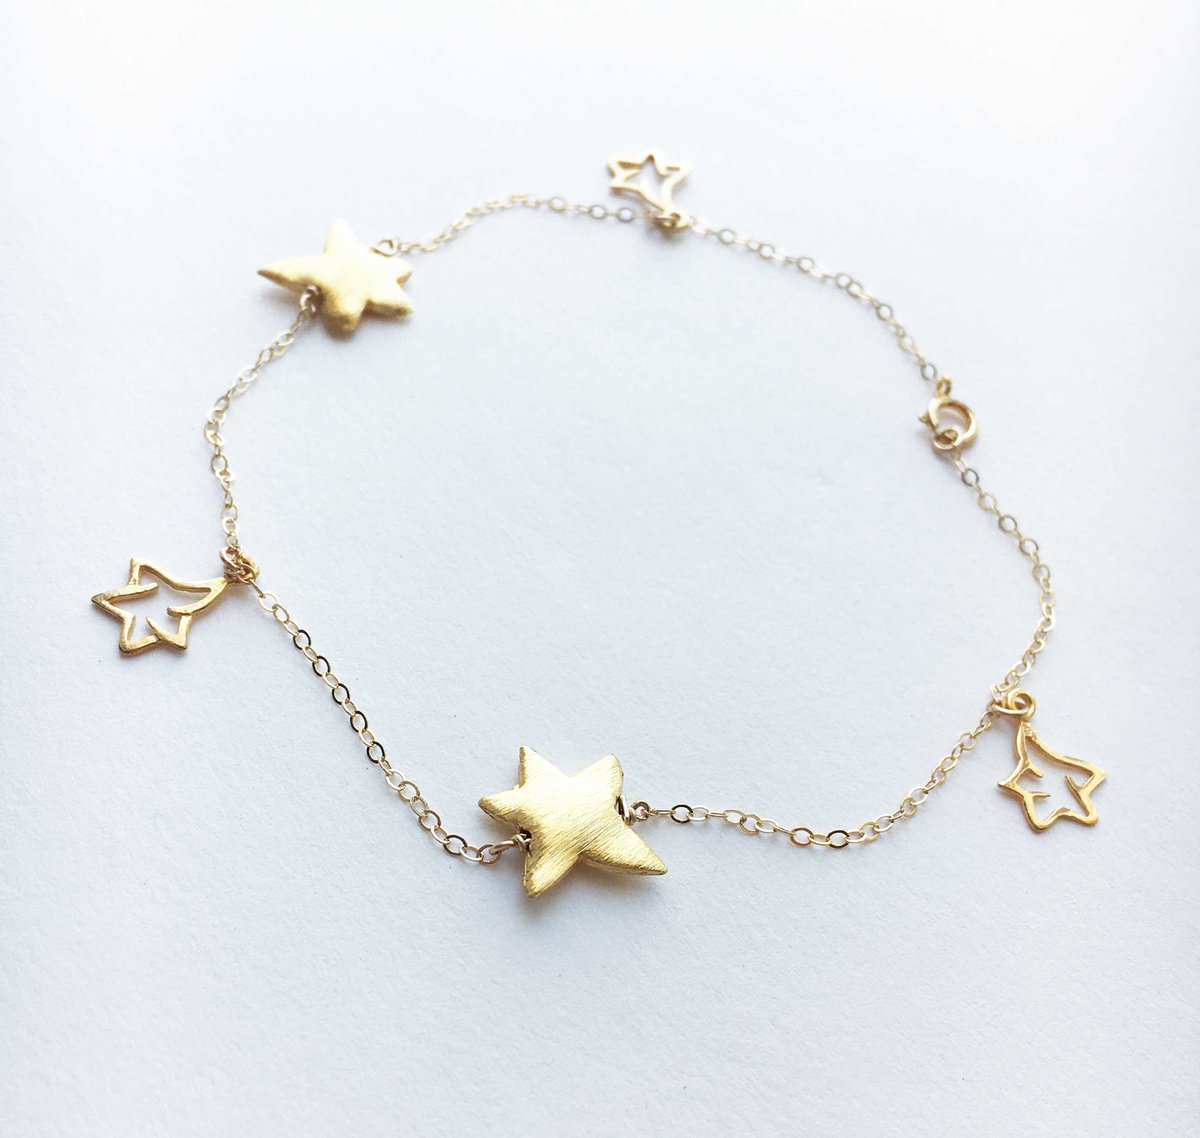 Custom-made Star ankle bracelet etsy.me/2KvSQnn #anklet #anklebracelet #footjewelry #summerjewelry #beachanklet #staranklet #starfishanklet #goldanklet #summer #jewelry #personalziedgifts #customanklet